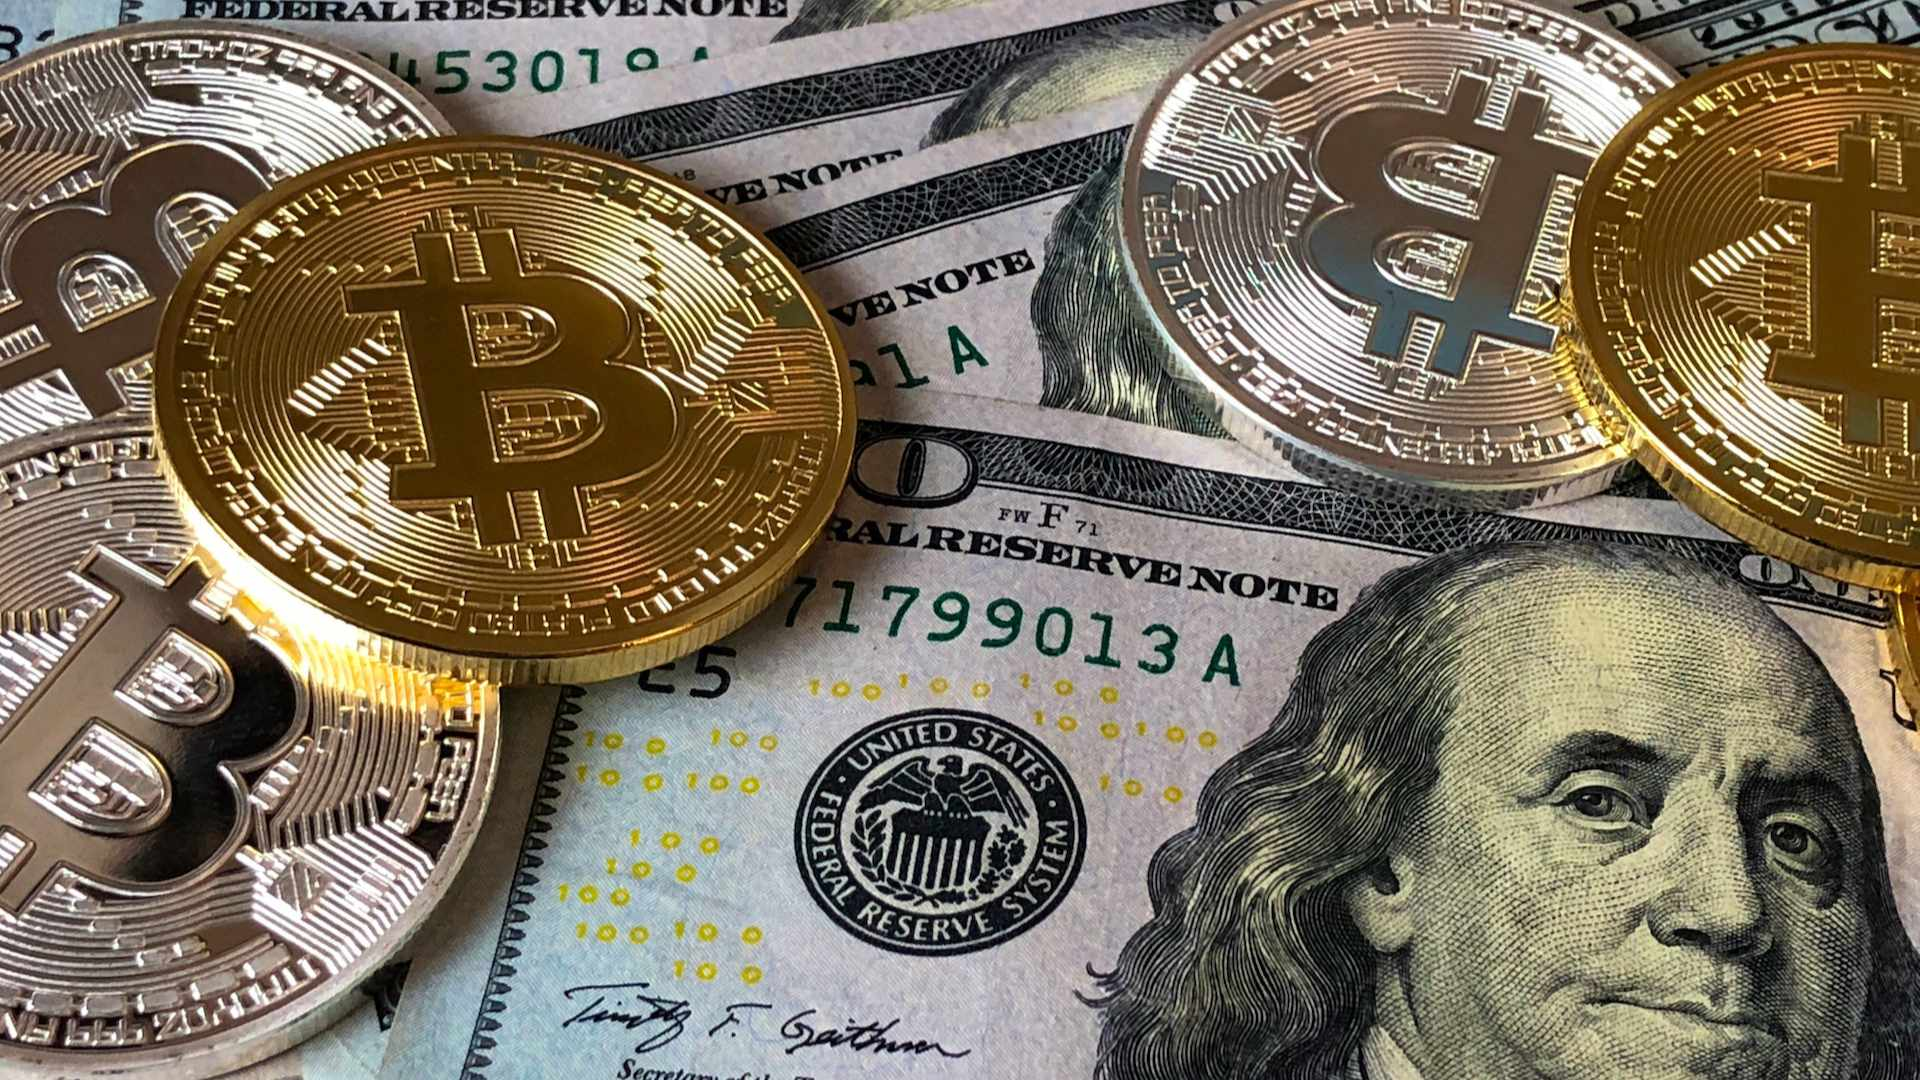 Bitcoins and the Dollar. The billion dollar question.